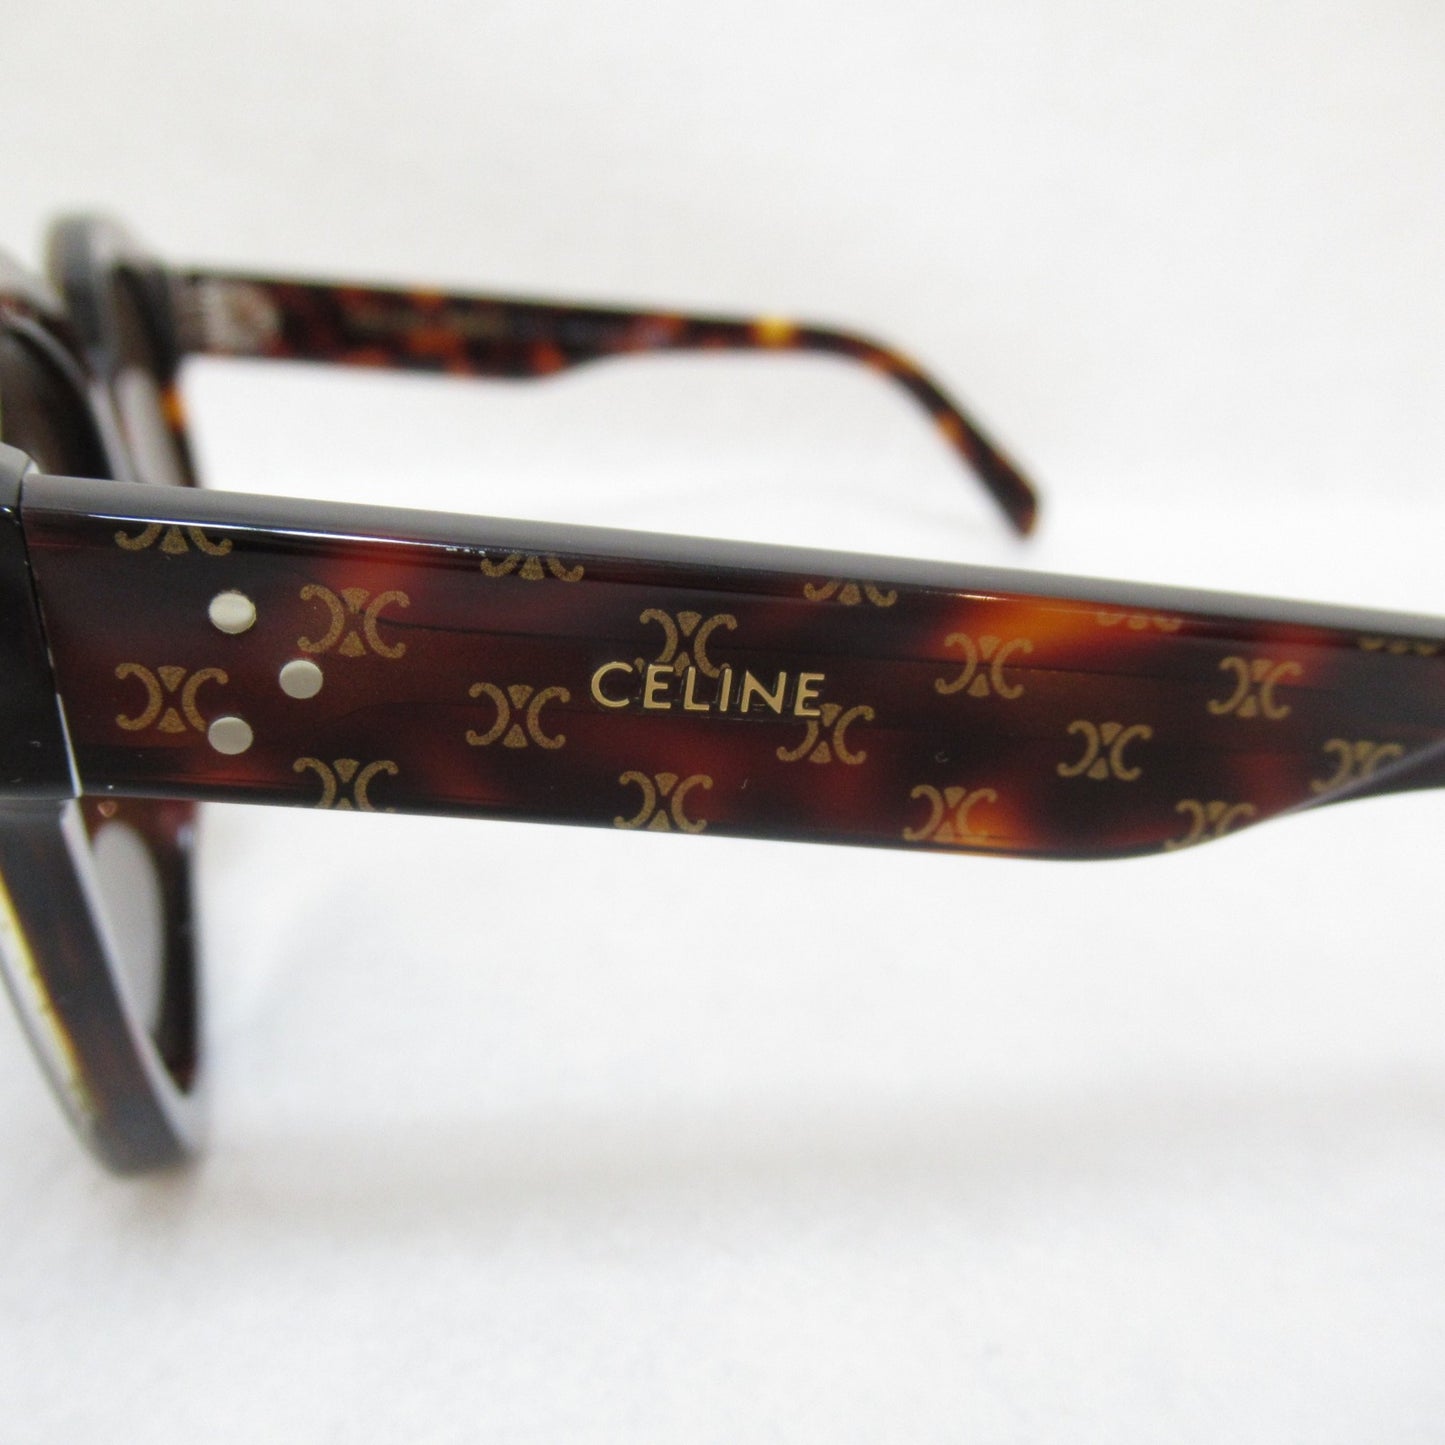 Celine Unisex Brown Plastic Unisex Sunglasses by Celine in Brown